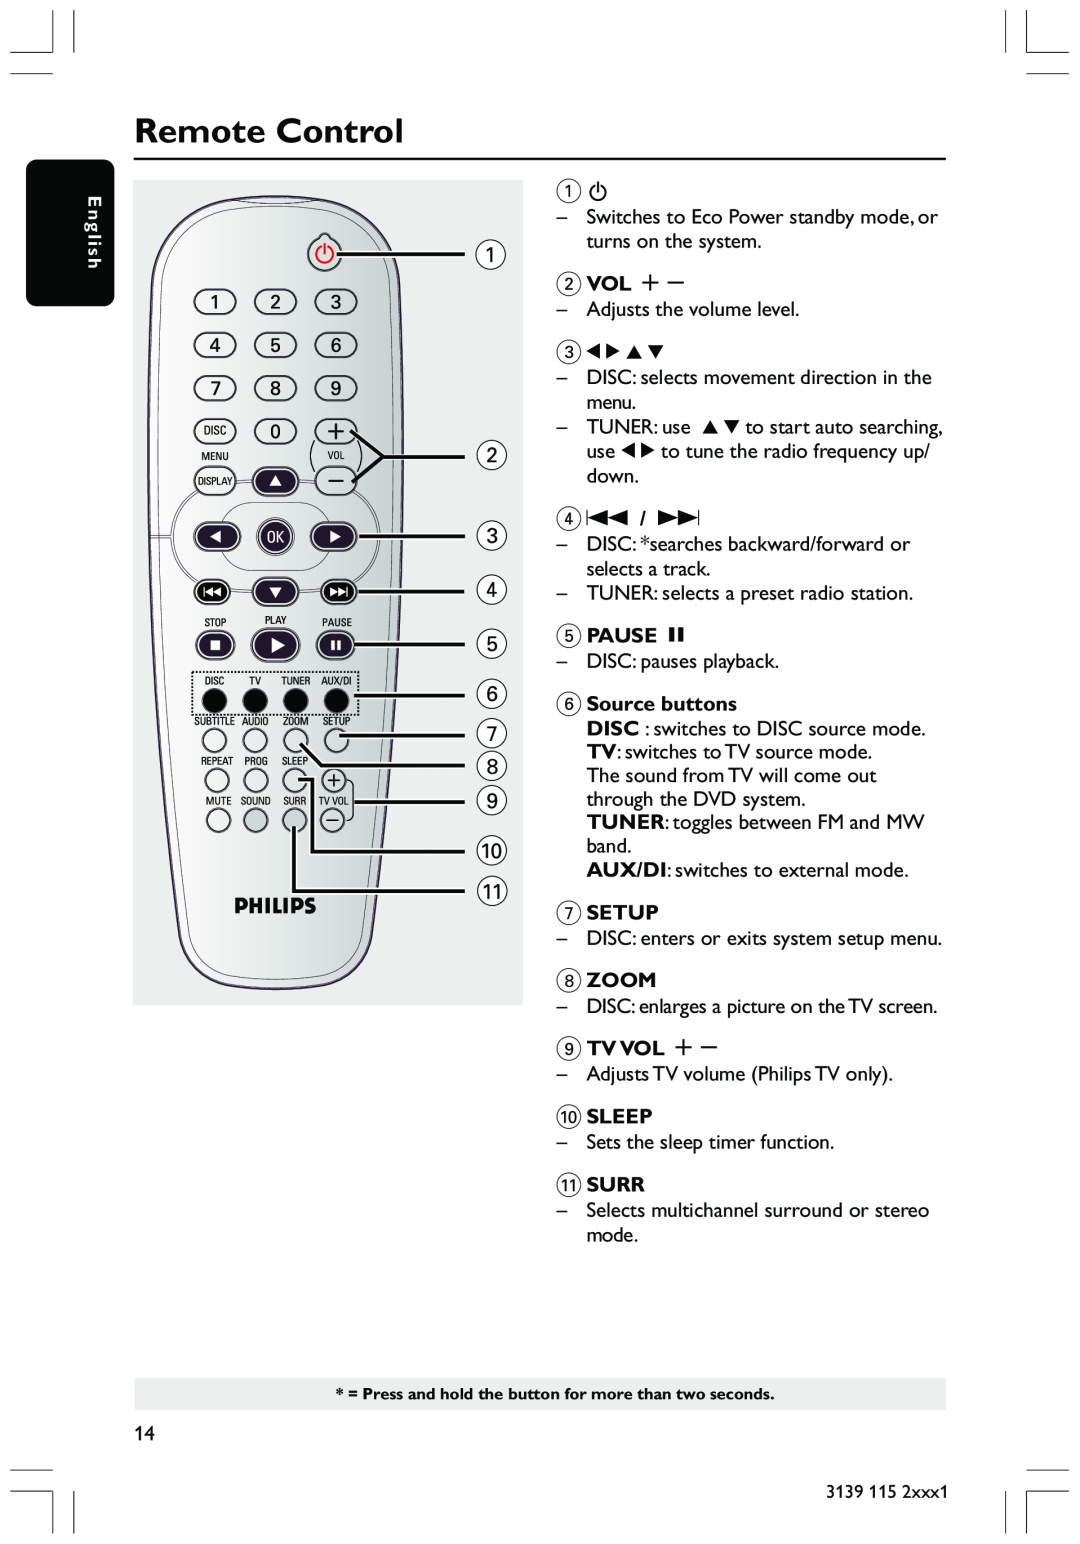 Philips HTS3300 user manual Remote Control, 2VOL +, 5PAUSE Å, 6Source buttons, 7SETUP, 8ZOOM, 9TV VOL +, 0SLEEP, Surr 